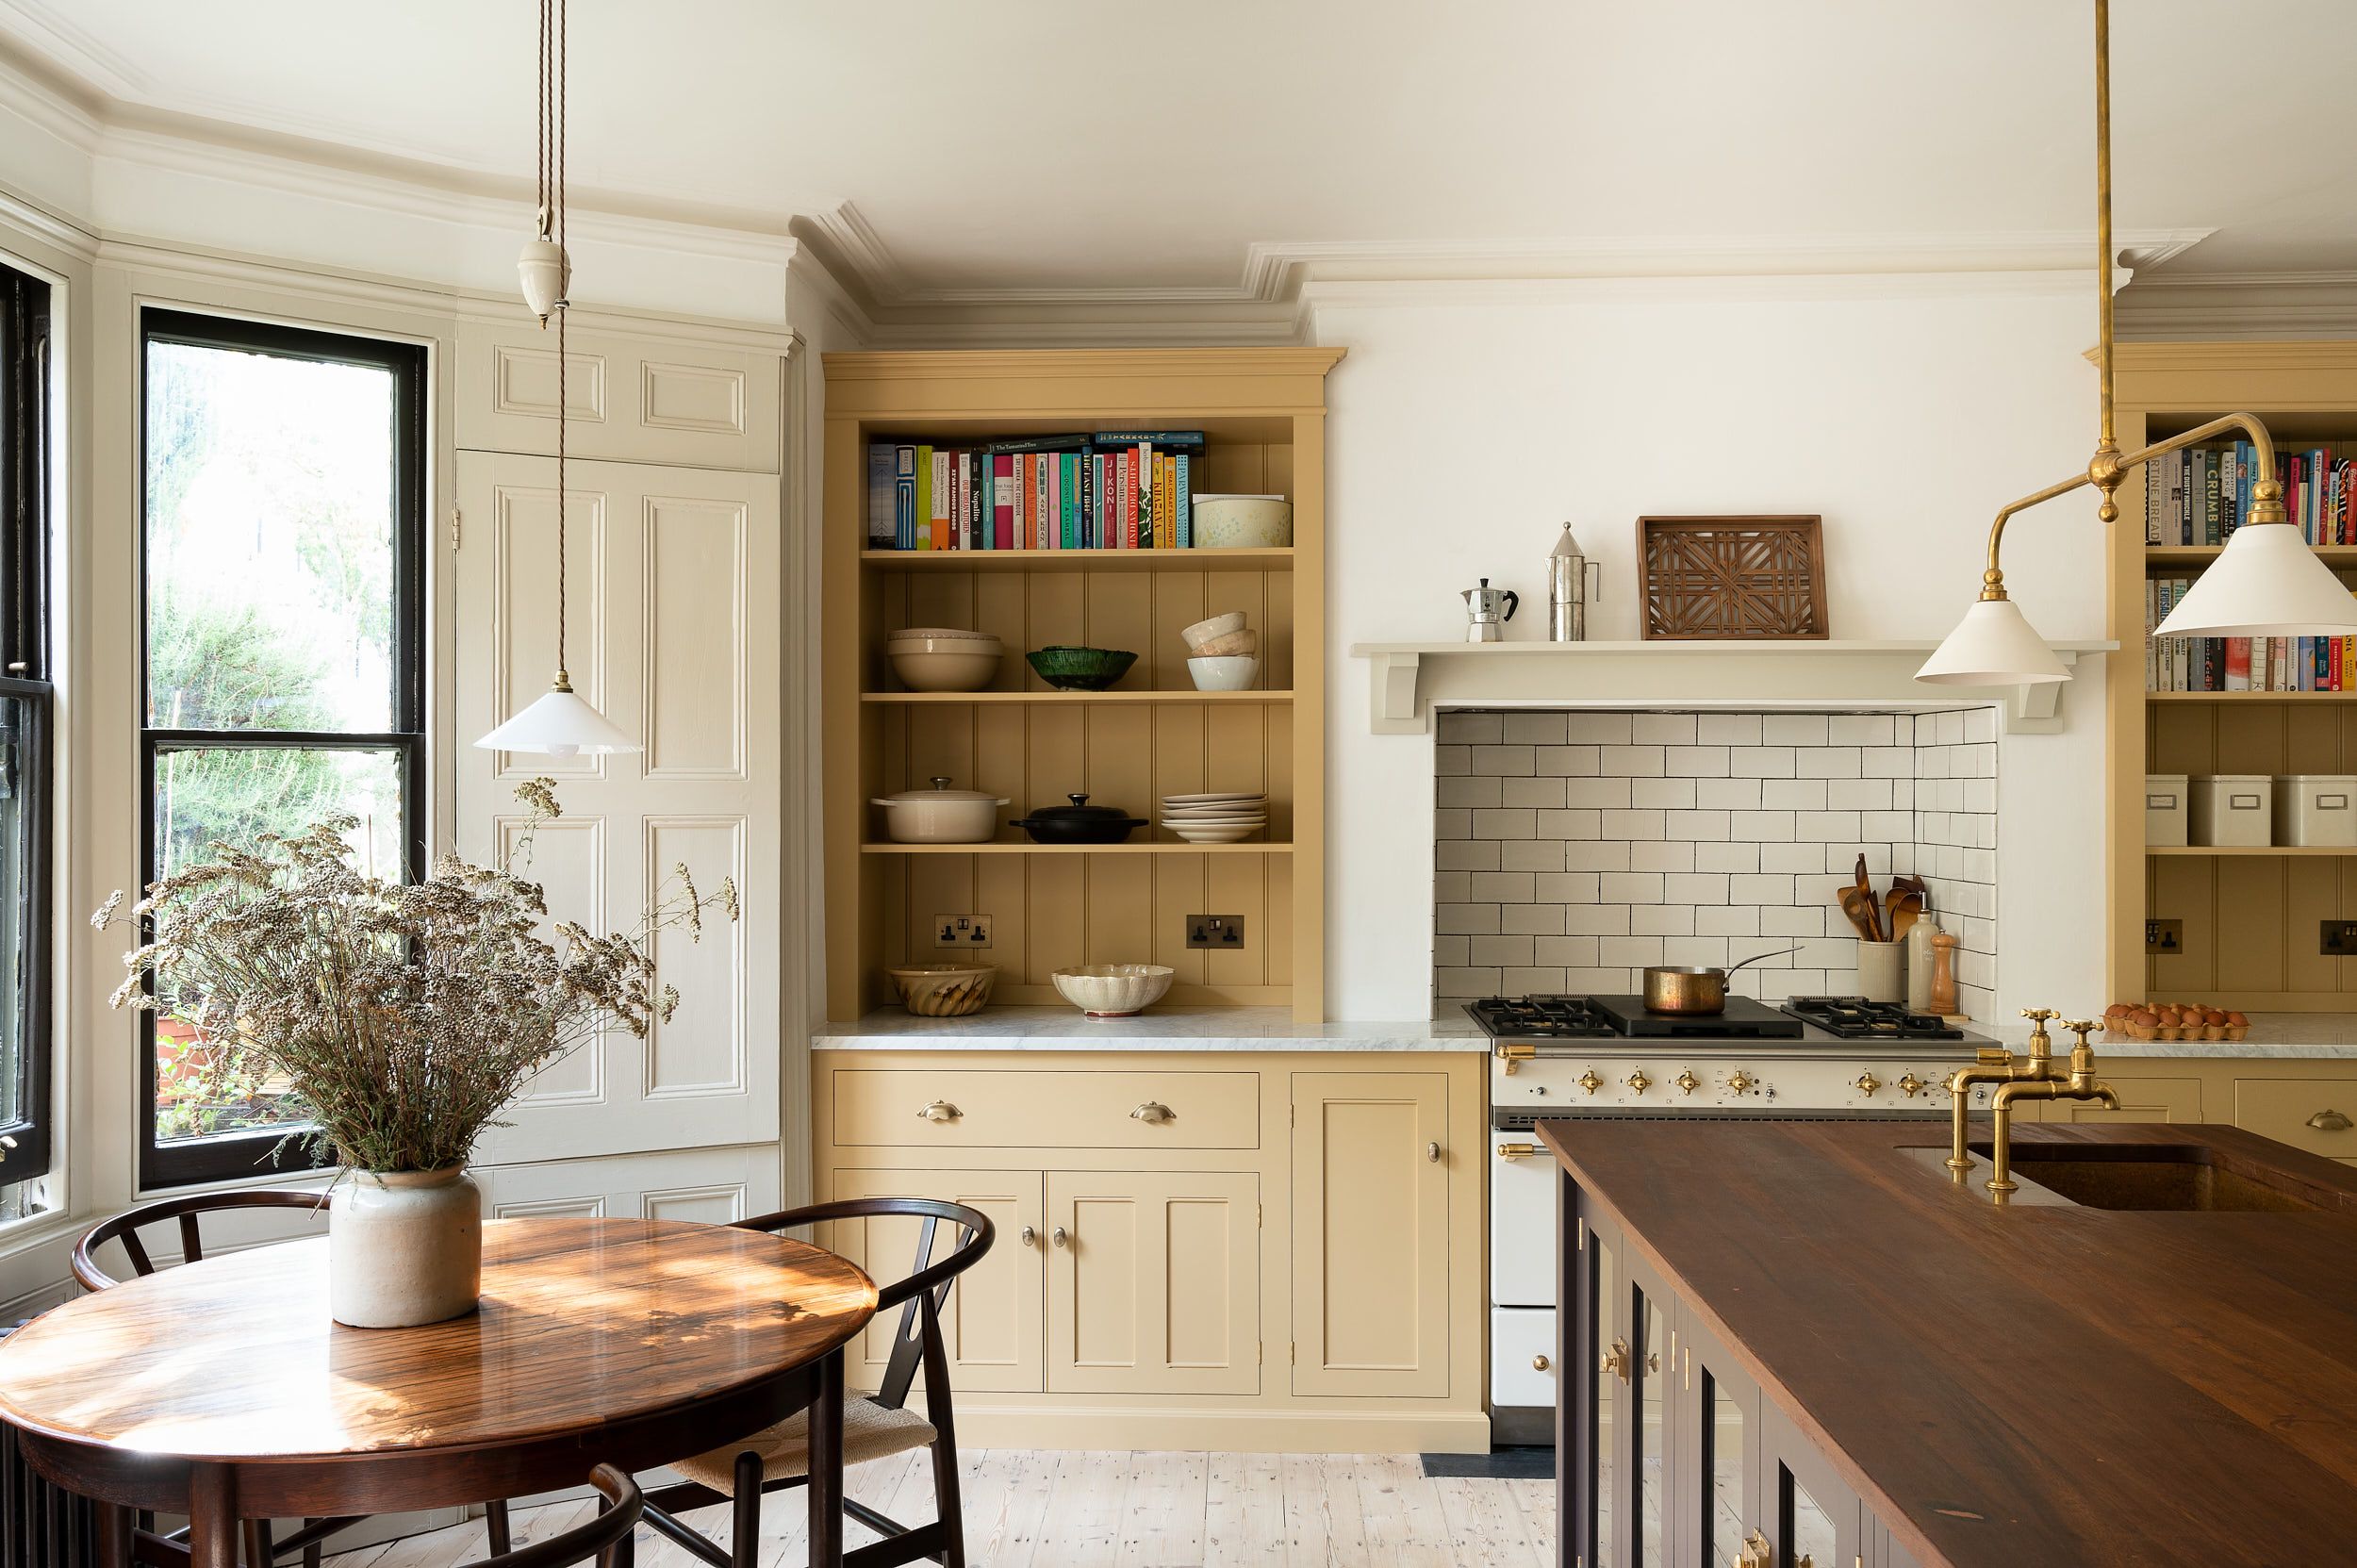 Muebles persianas para la cocina  Interior design kitchen contemporary,  House design kitchen, Kitchen room design